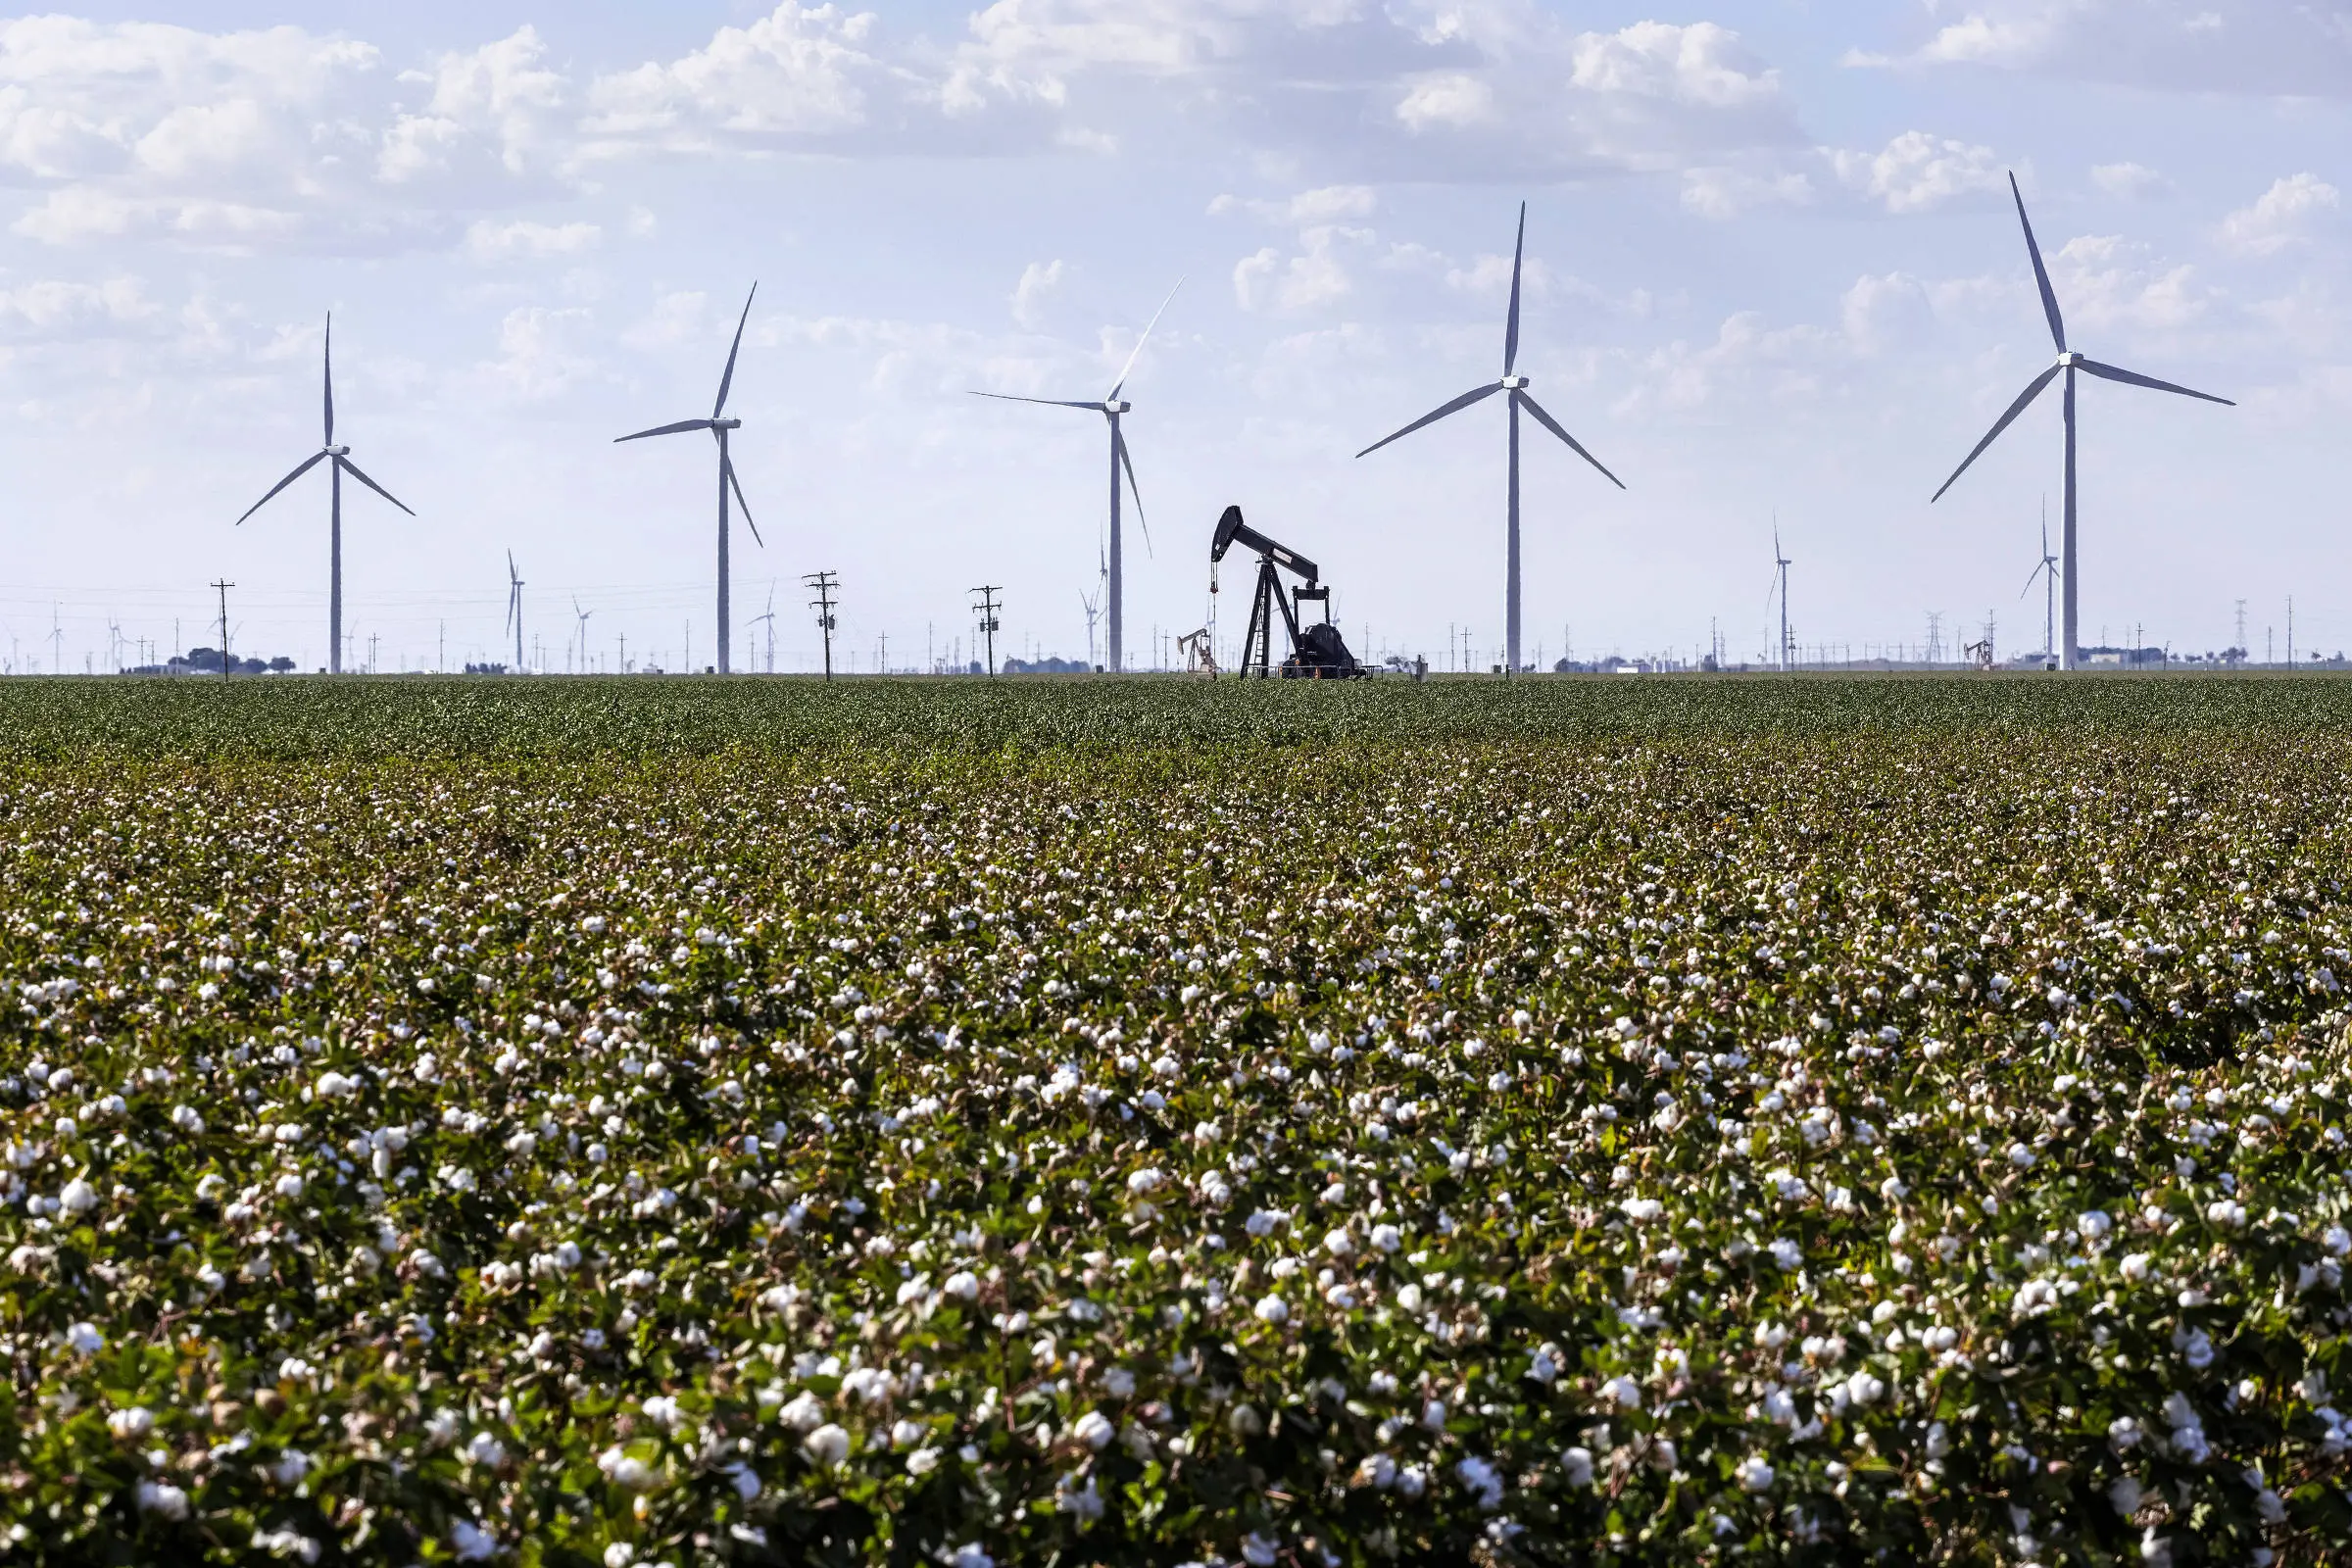 Oil well amid wind power generators near the city of Odessa, Texas. 